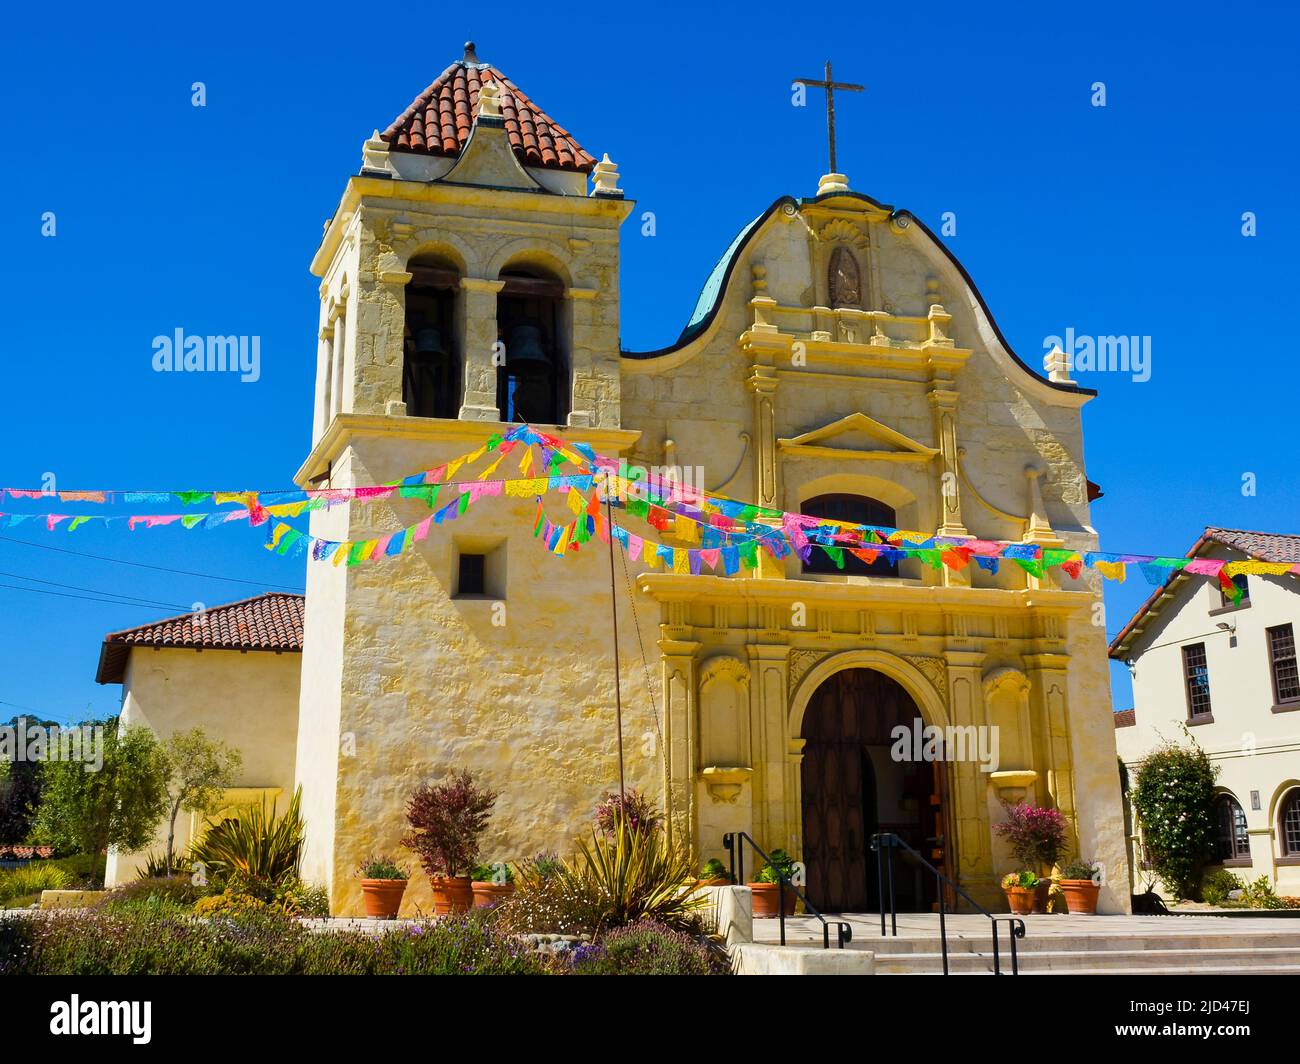 The Cathedral of San Carlos Borromeo, also known as the Royal Presidio Chapel - Monterey, California. It is a US National Historic Landmark. Stock Photo